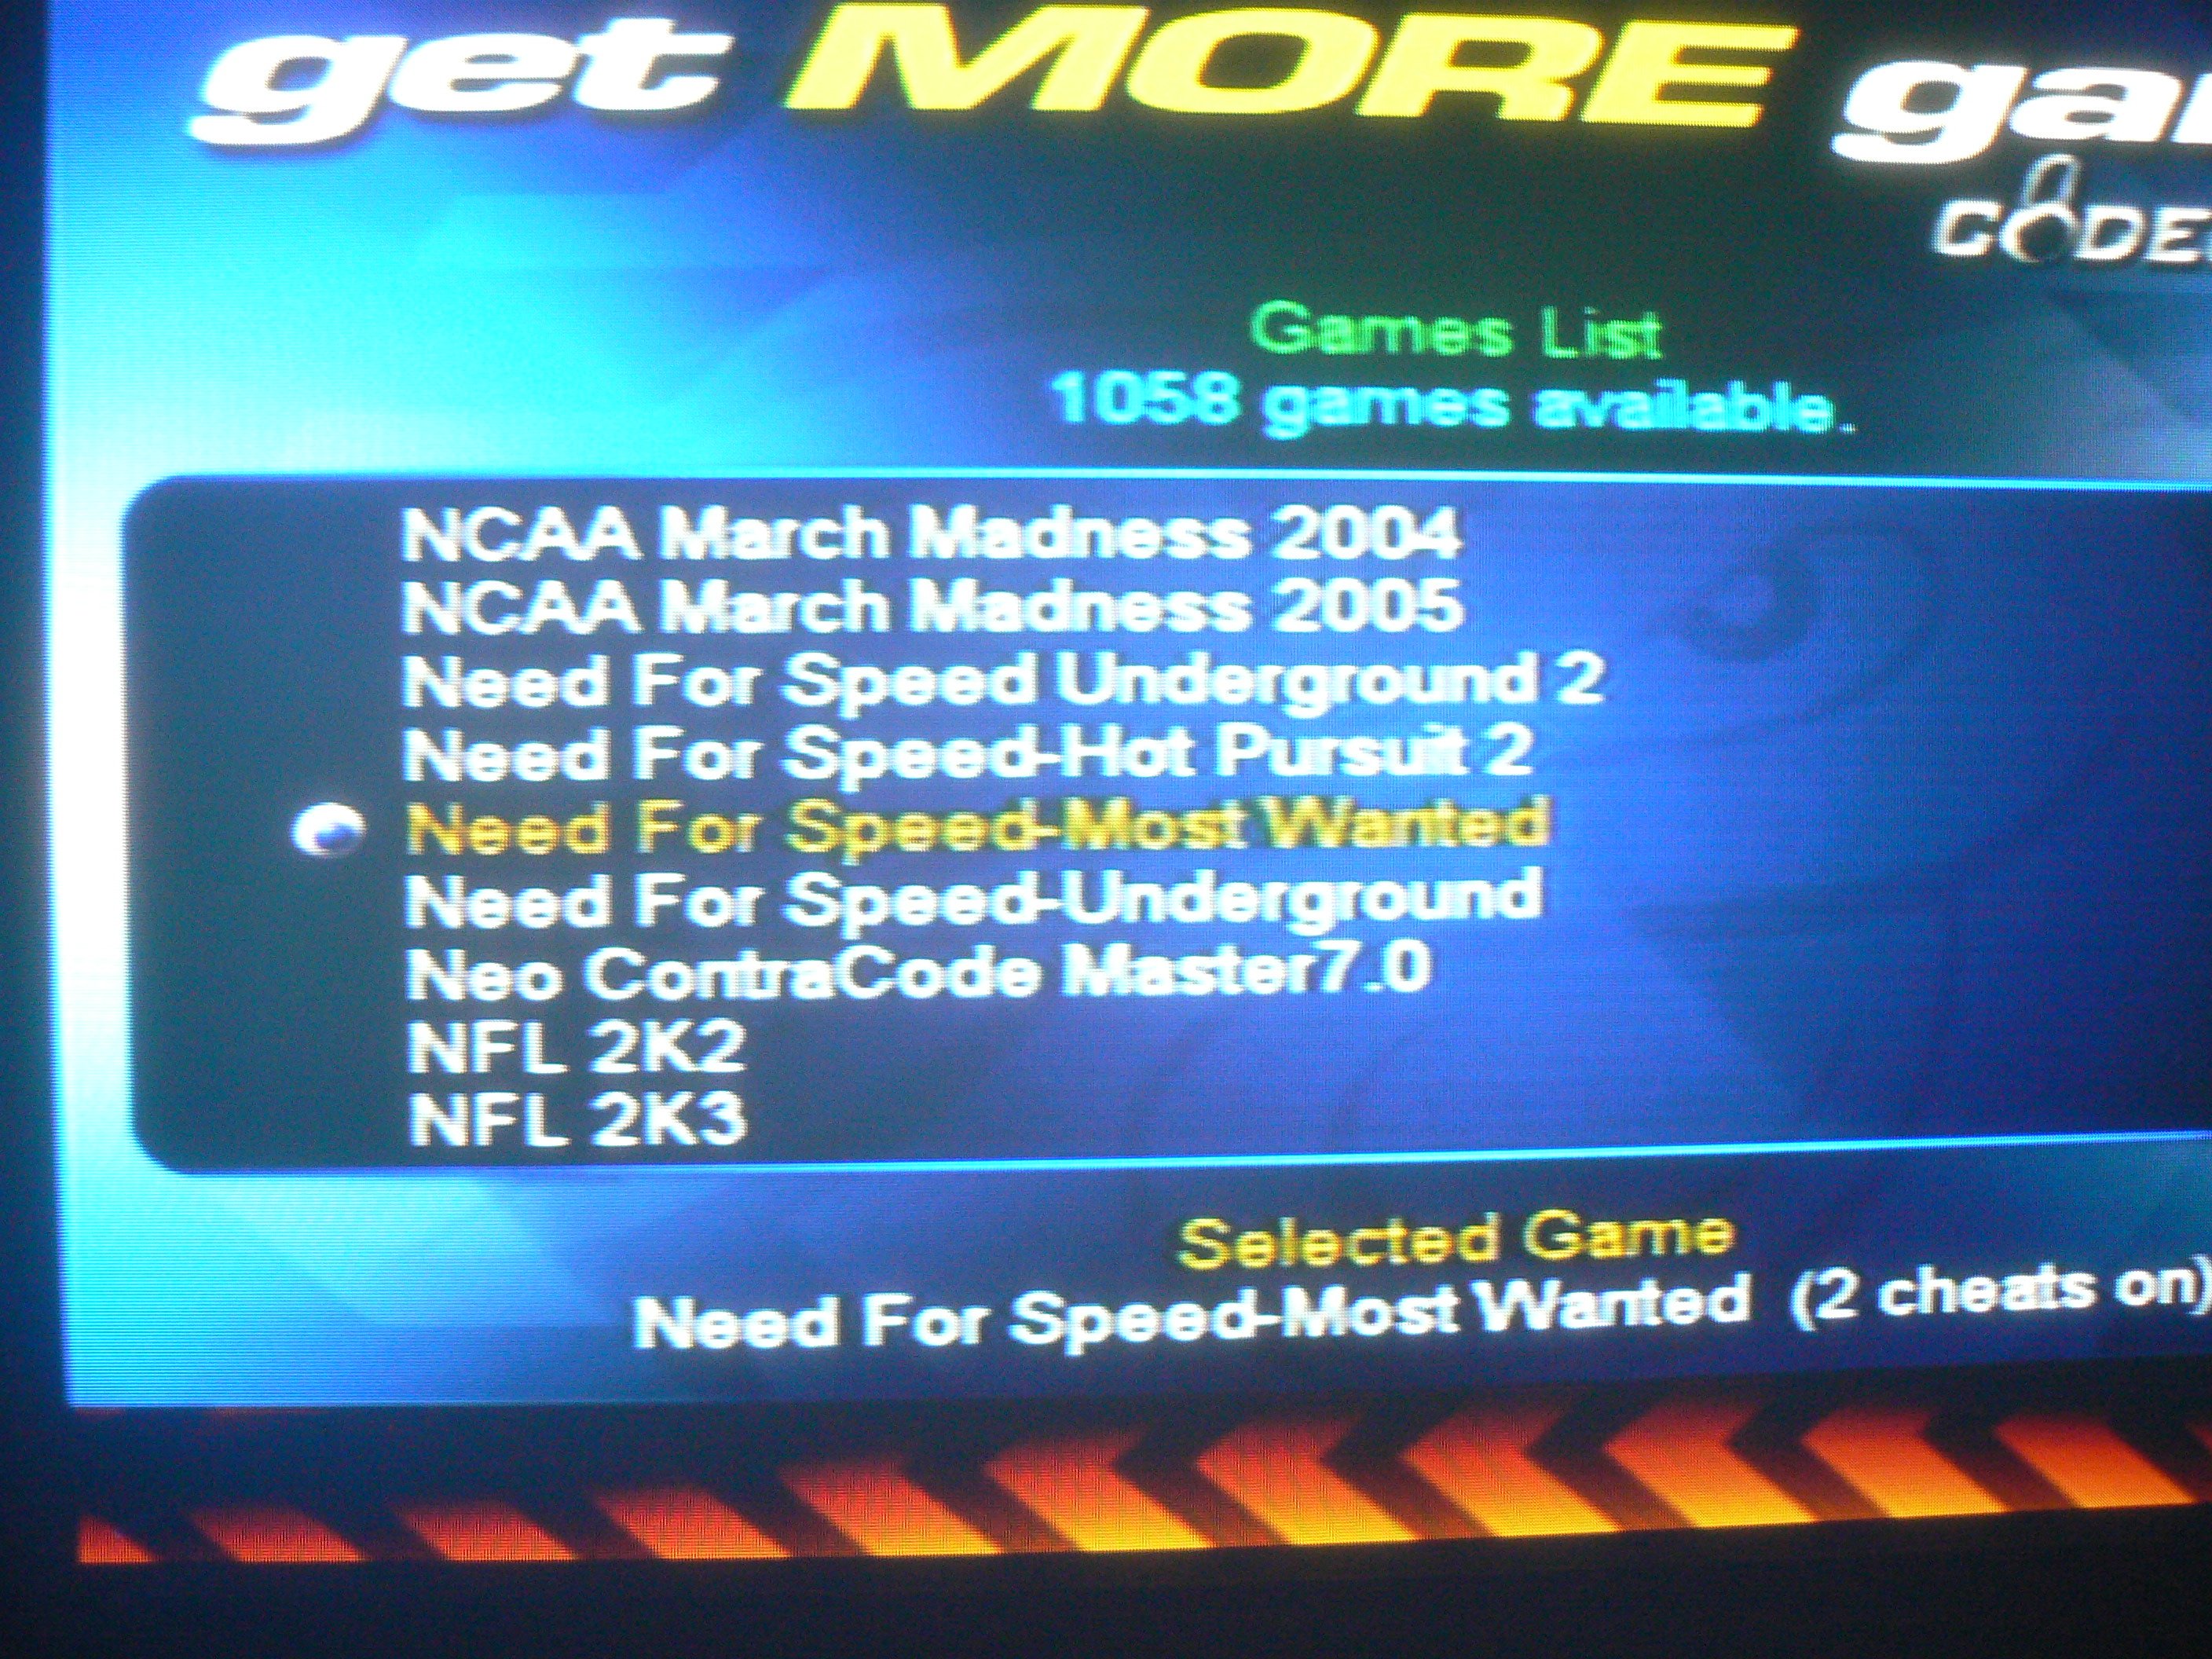 PS2 CD GAMES (Gameshark 2 V4)not games for setting cheat game